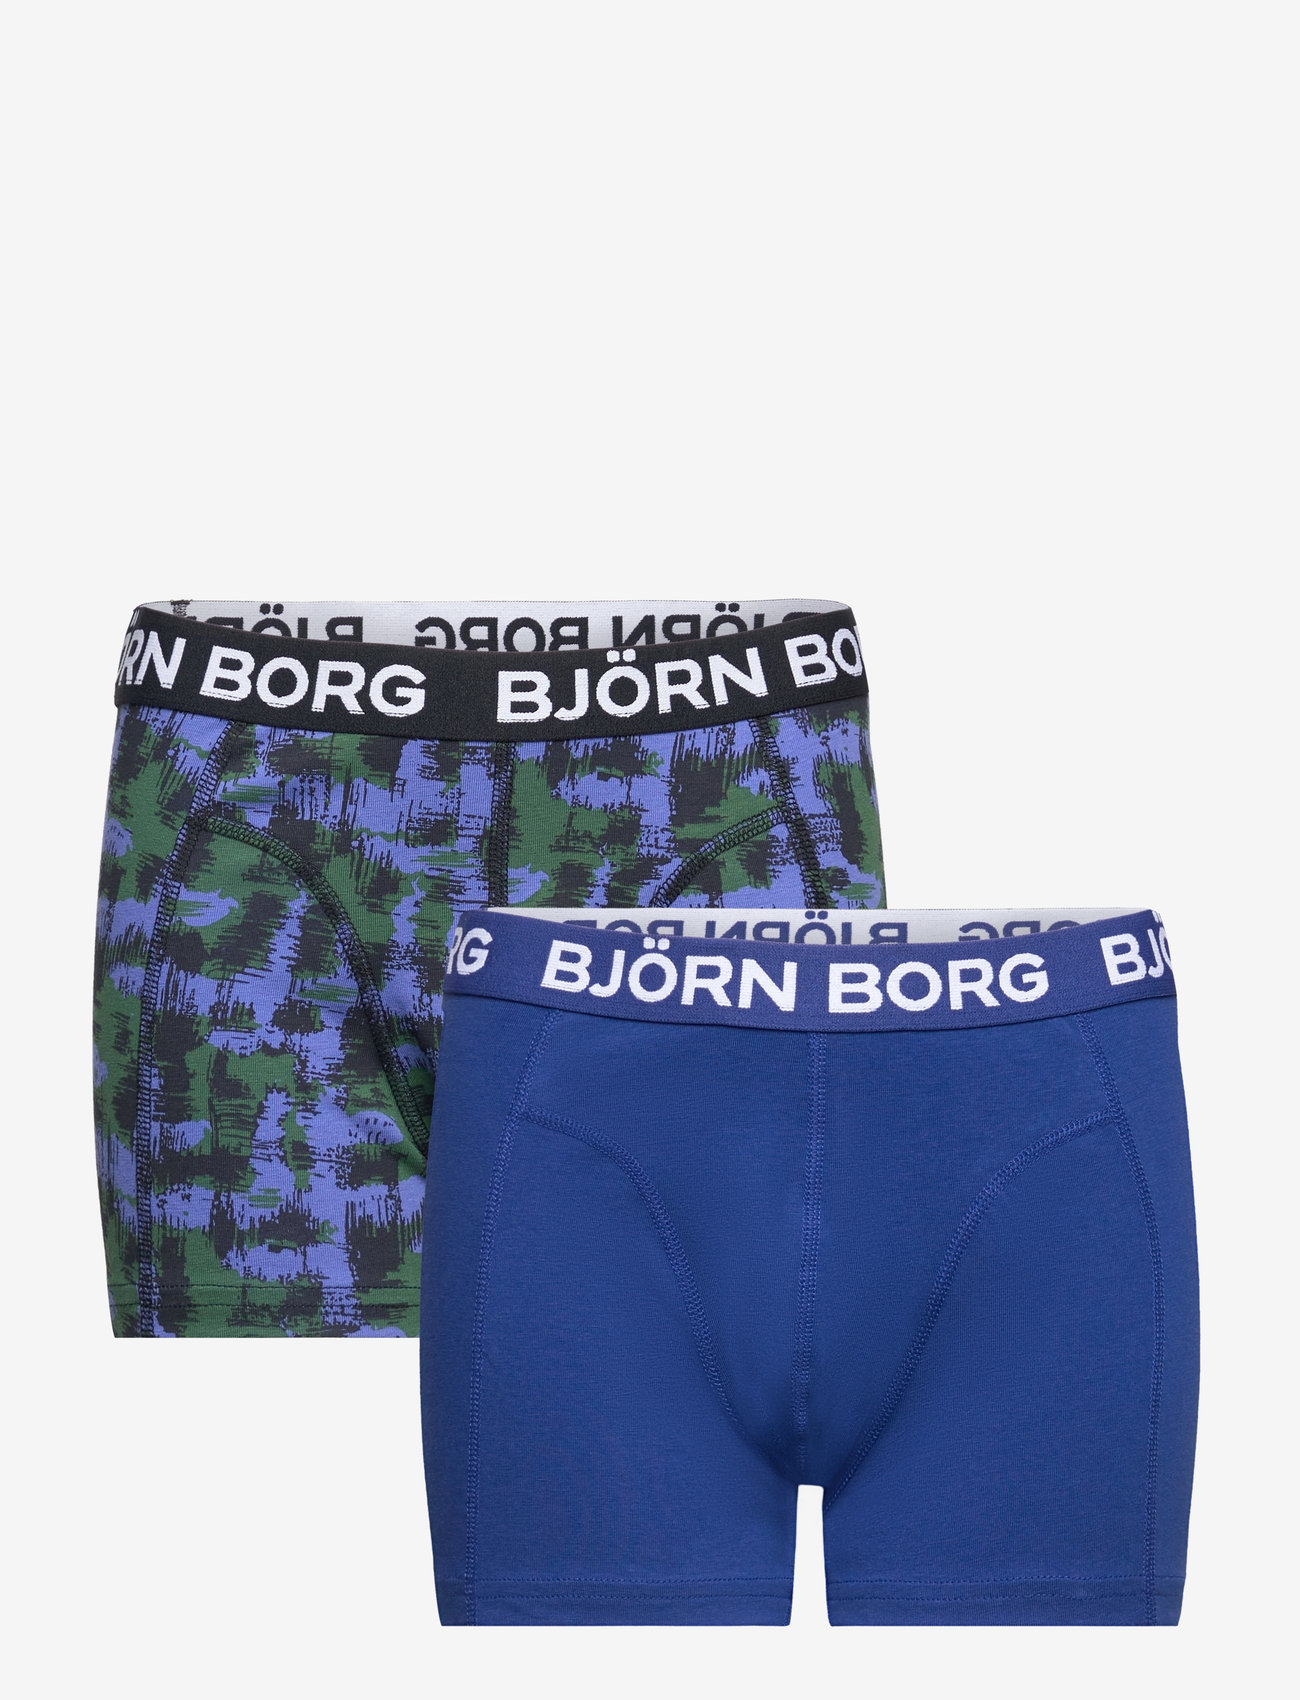 Björn Borg - CORE BOXER 2p - underpants - multipack 1 - 0